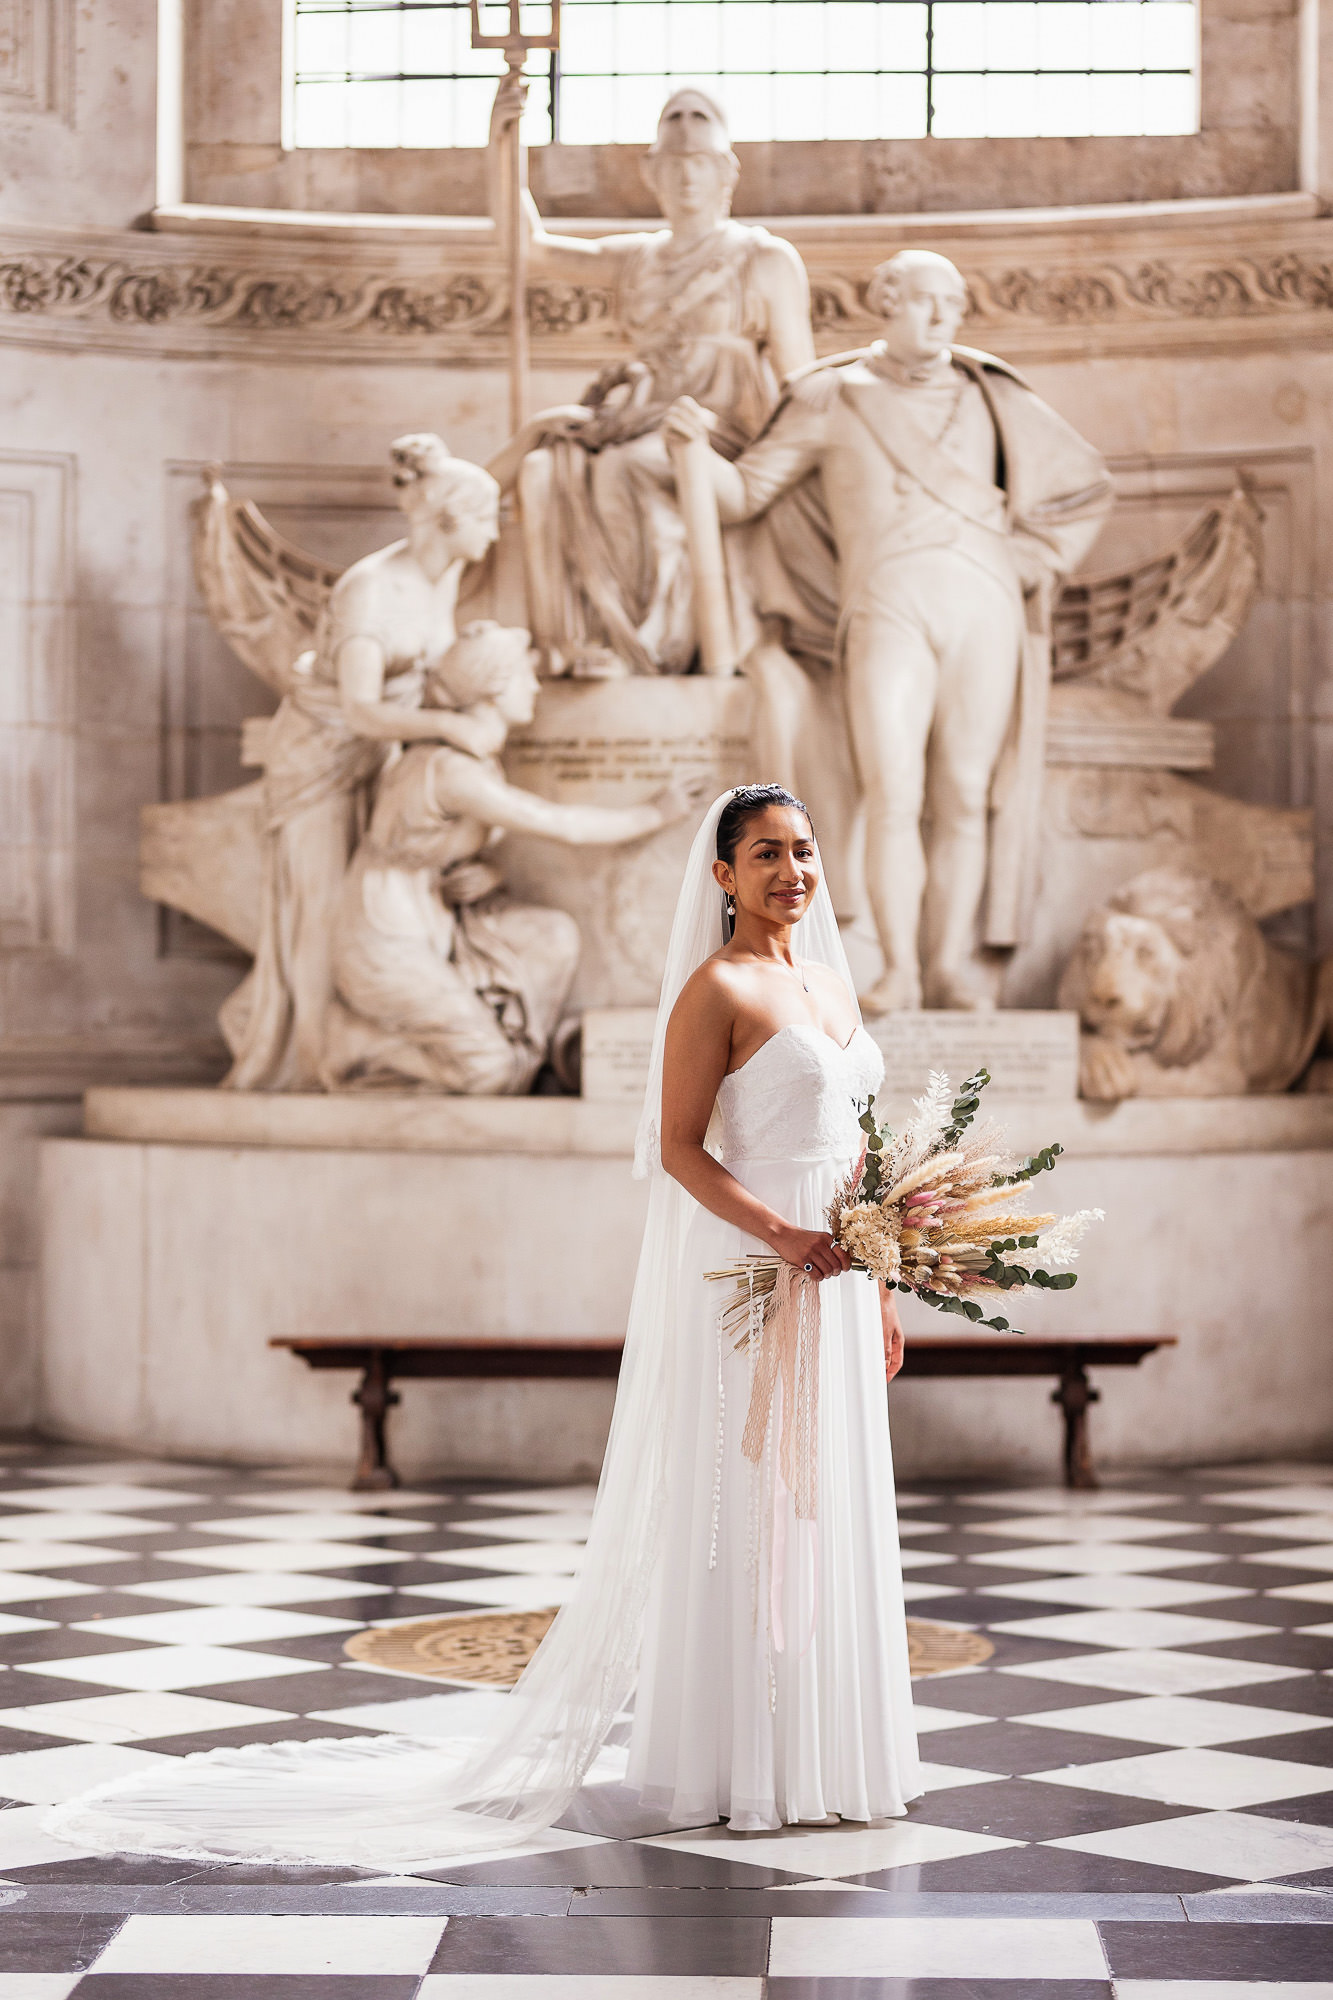 Multicultural wedding photographer, St Pauls Cathedral, London, Brides portrait